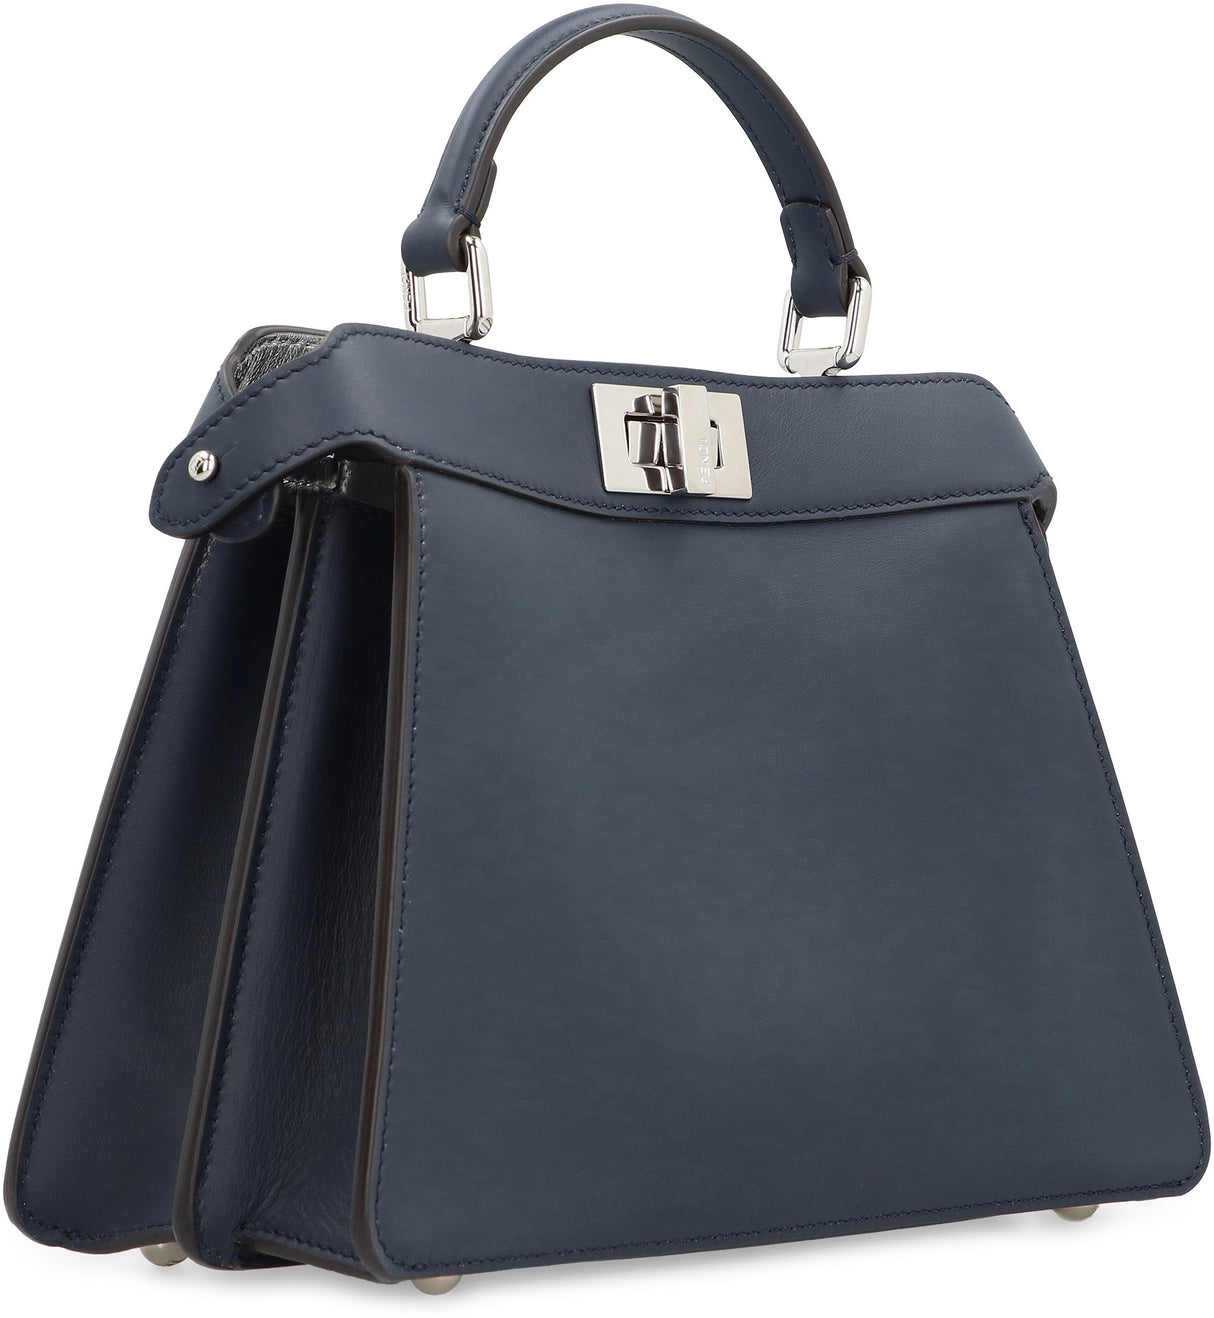 Blue Leather Top Handle Handbag for Women